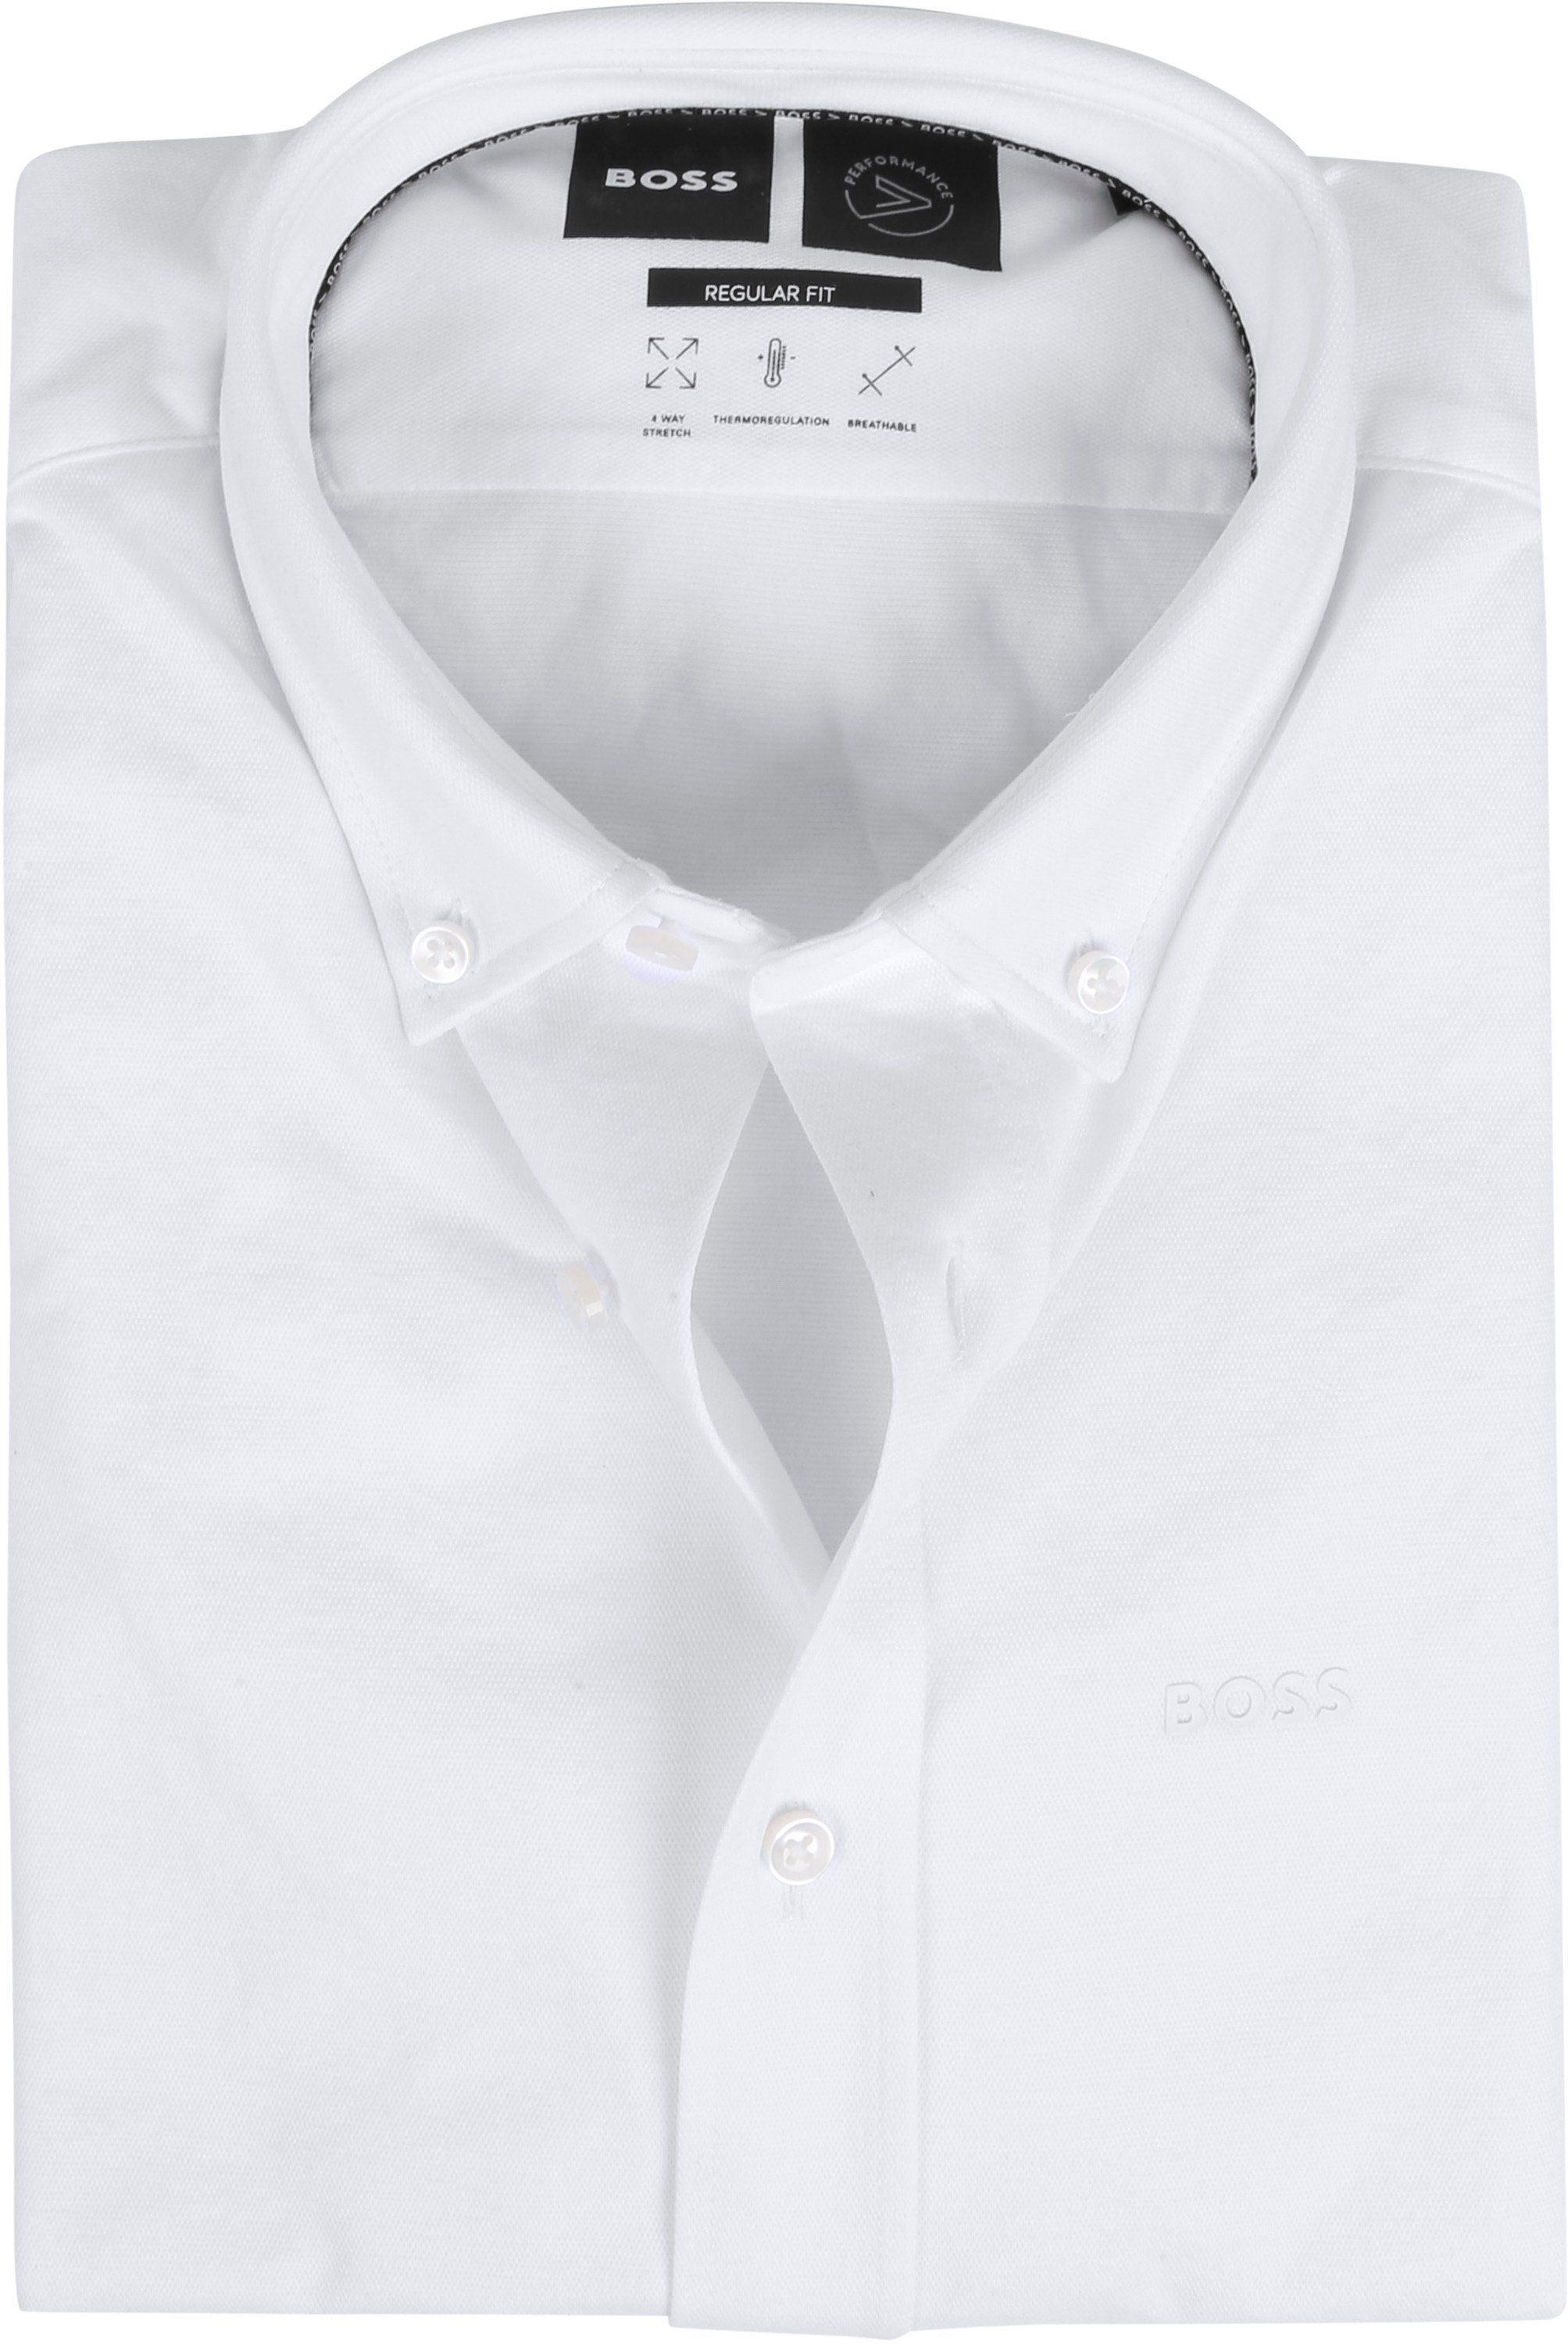 Hugo Boss Shirt Uni White size 15 1/2